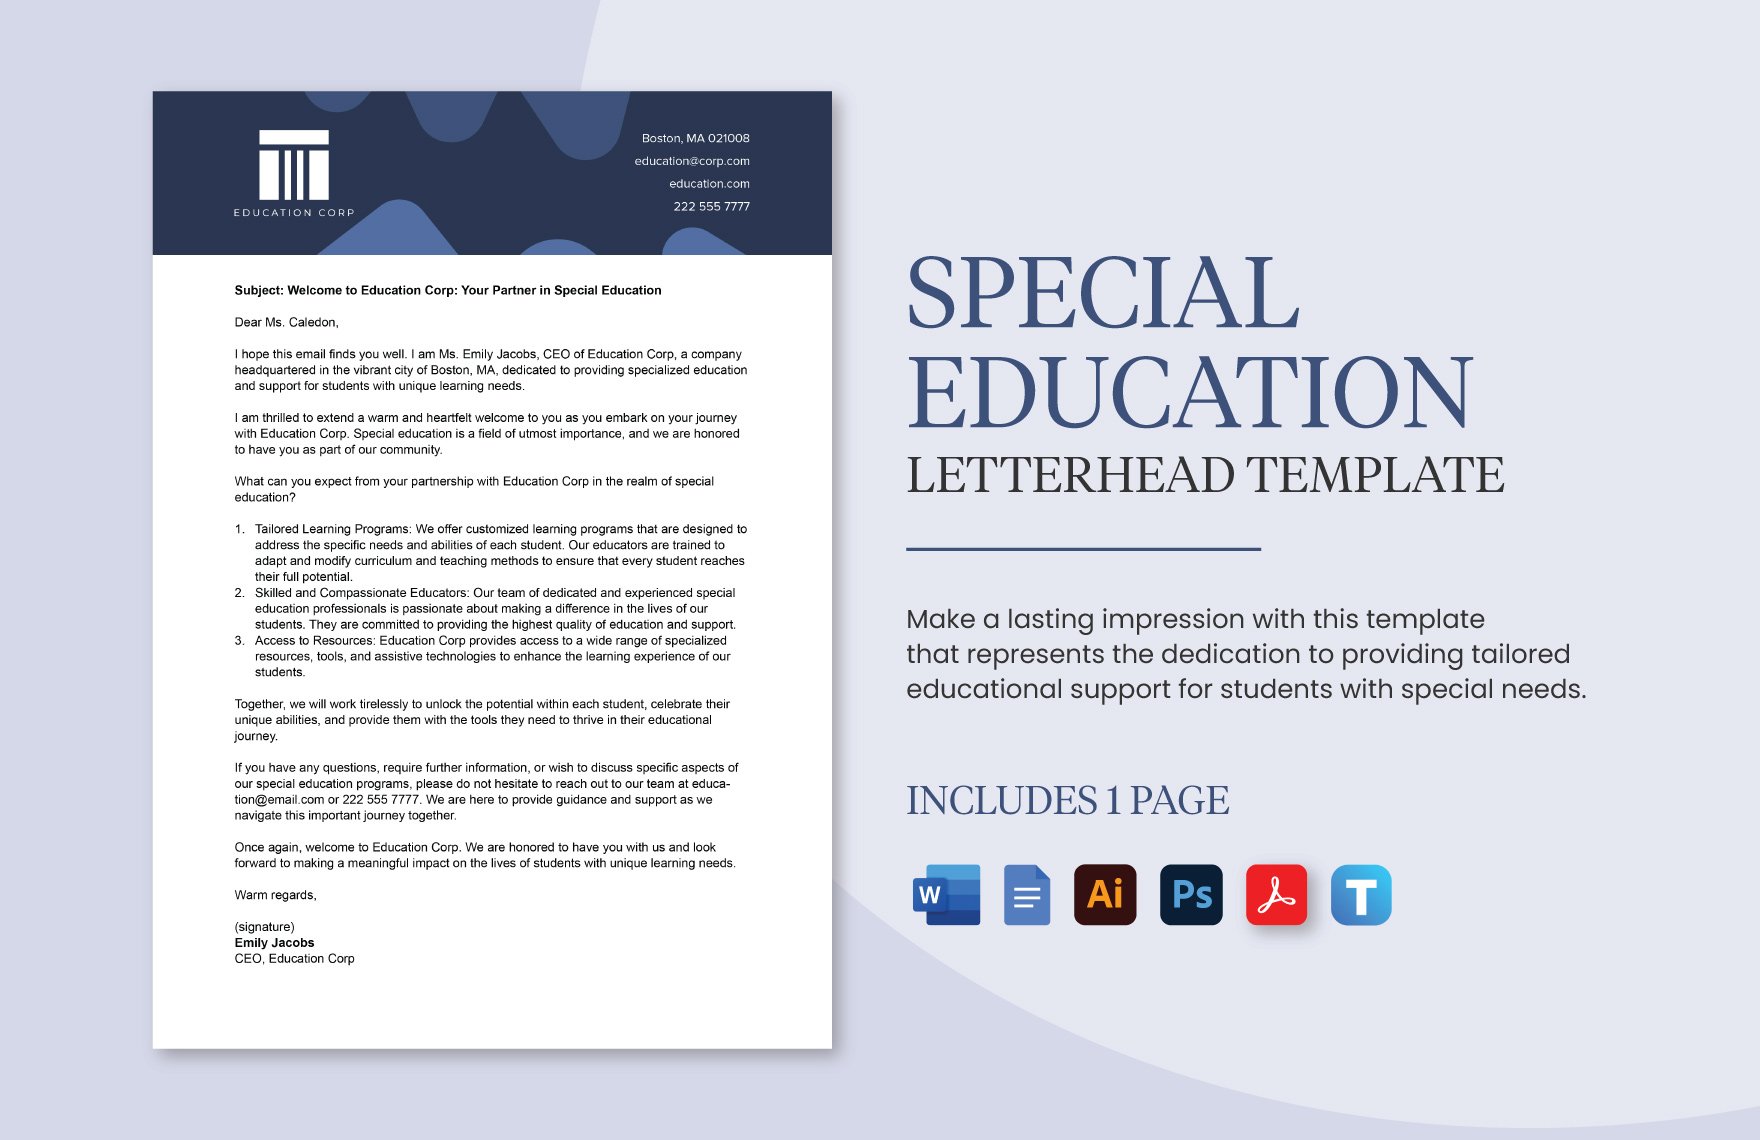 Special Education Letterhead Template